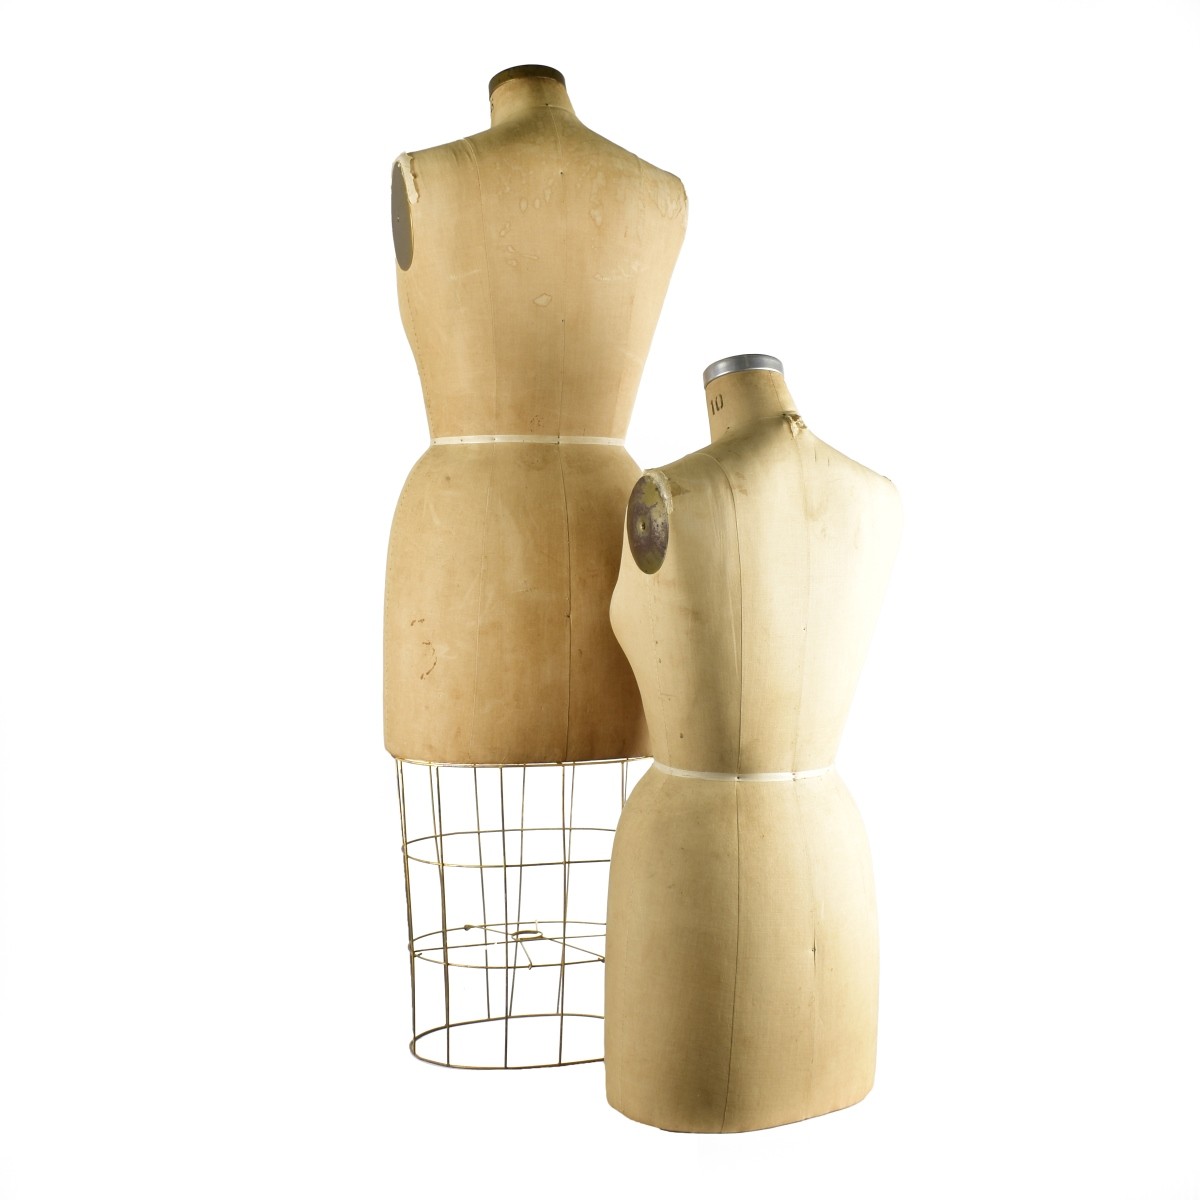 Two (2) Vintage Mannequin Torso Dress Forms